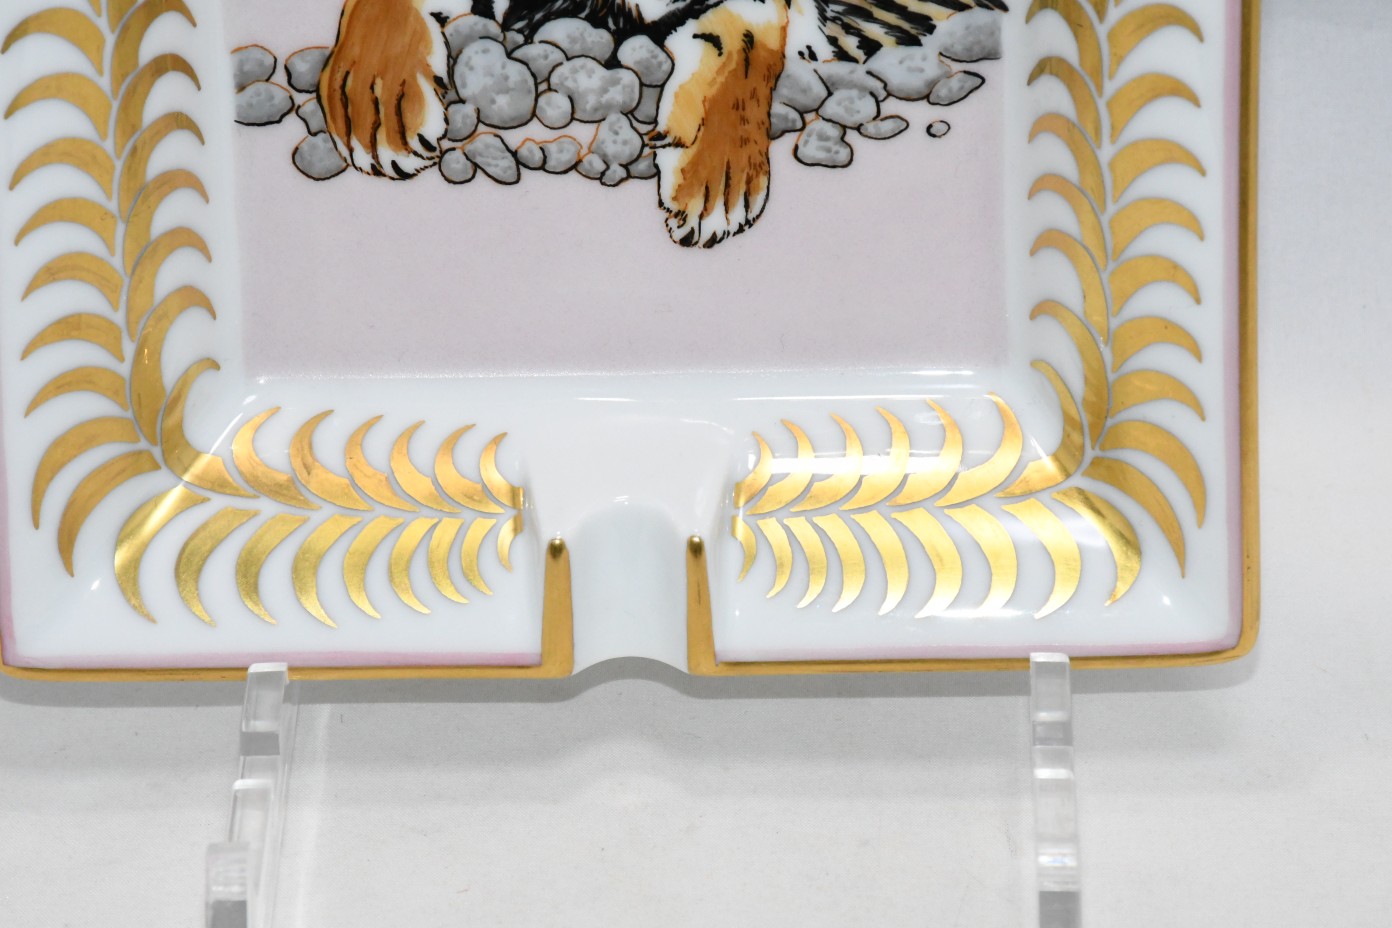 Hermes Change tray Royal Tiger pink porcelain Ashtray plate tableware – art  Japan Export